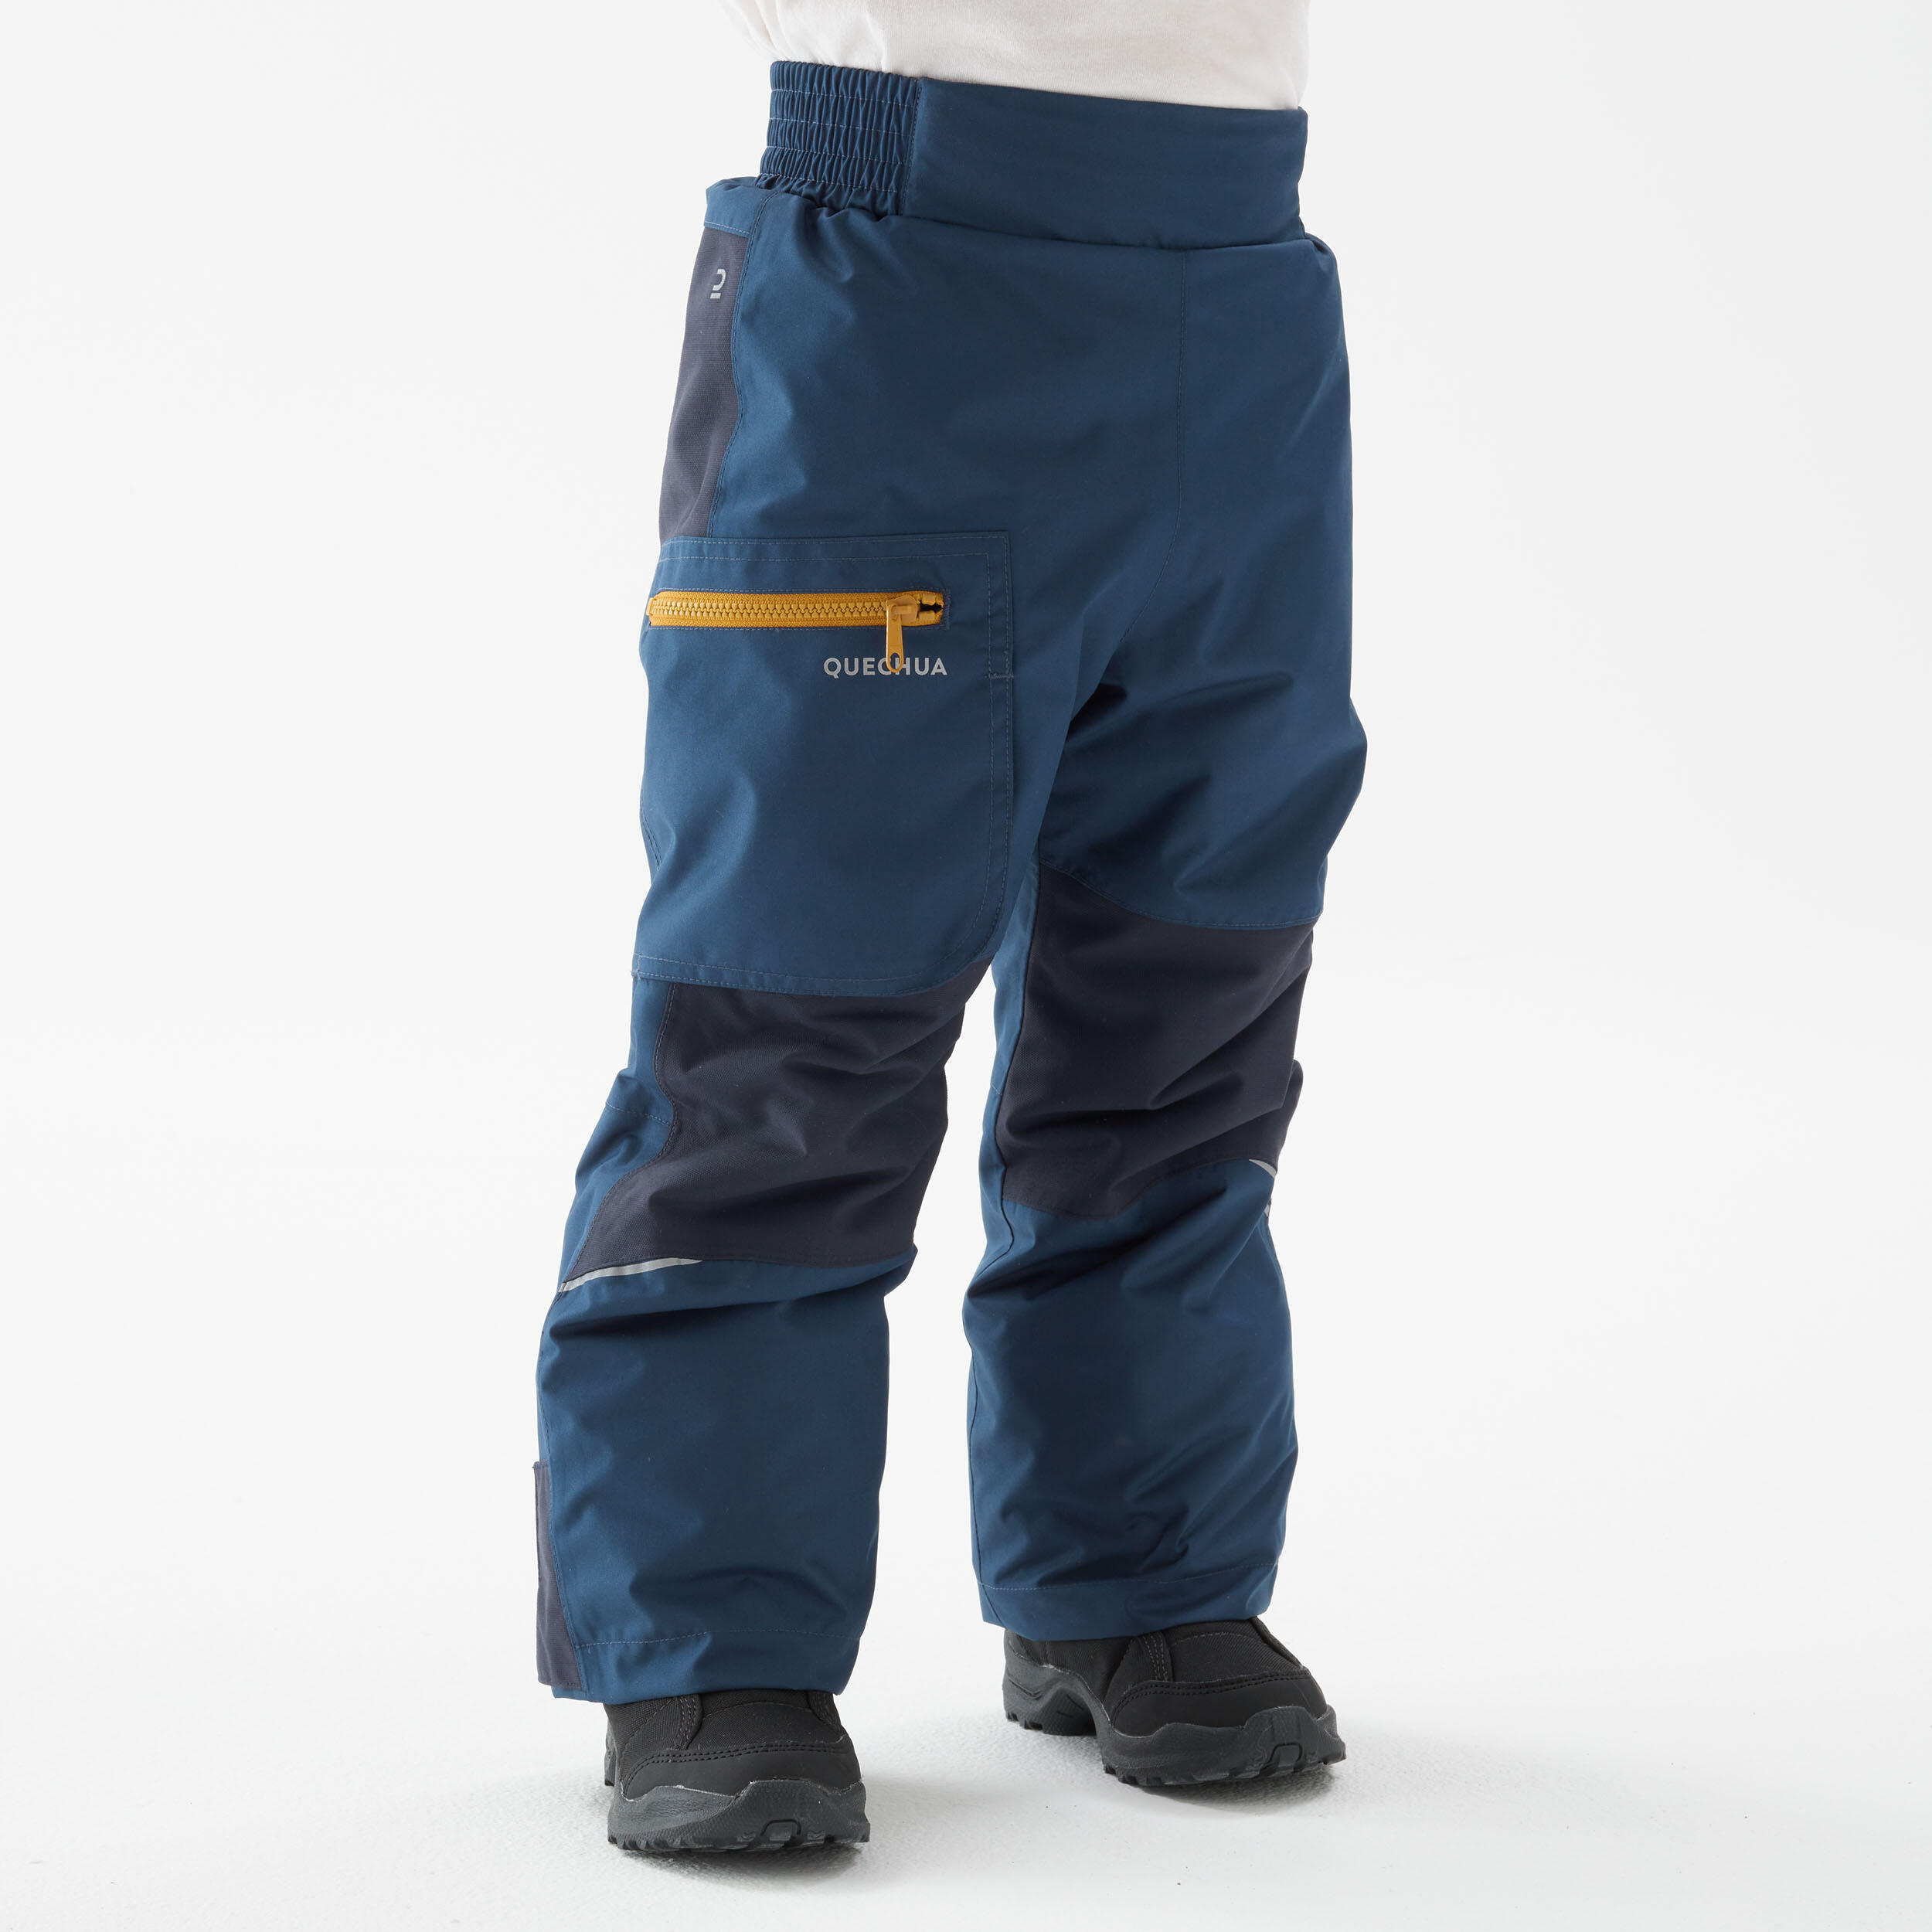 Kids’ Warm Waterproof Hiking Trousers - SH500 MOUNTAIN - Ages 2-6 5/12